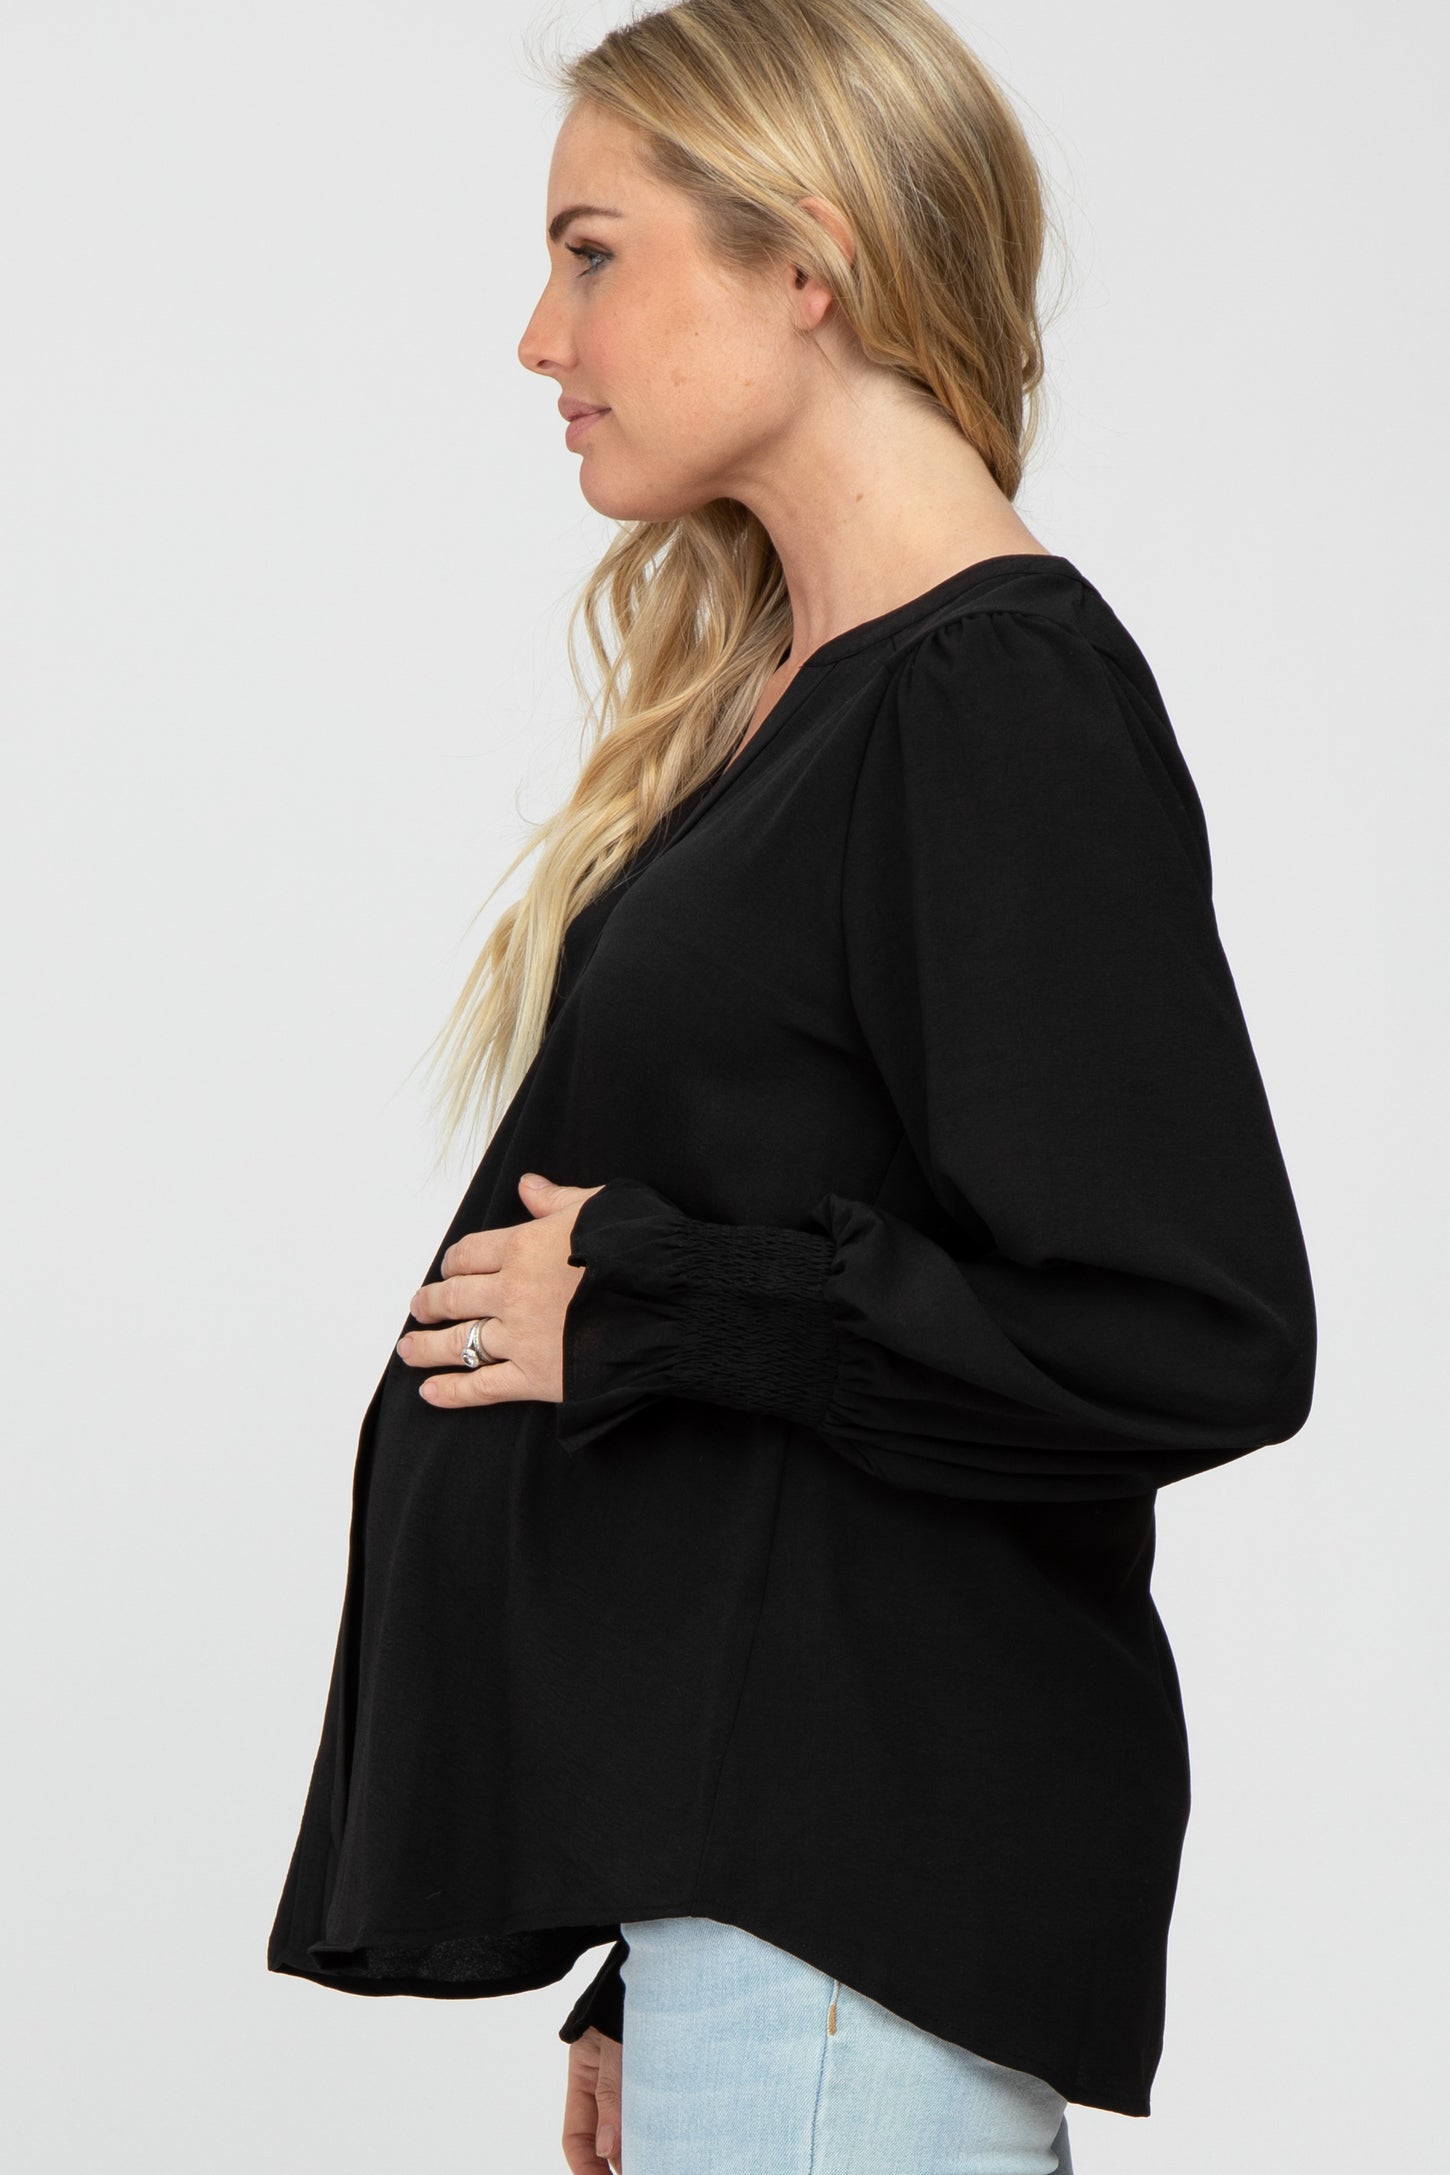 Black Long Ruffle Sleeve Maternity Blouse